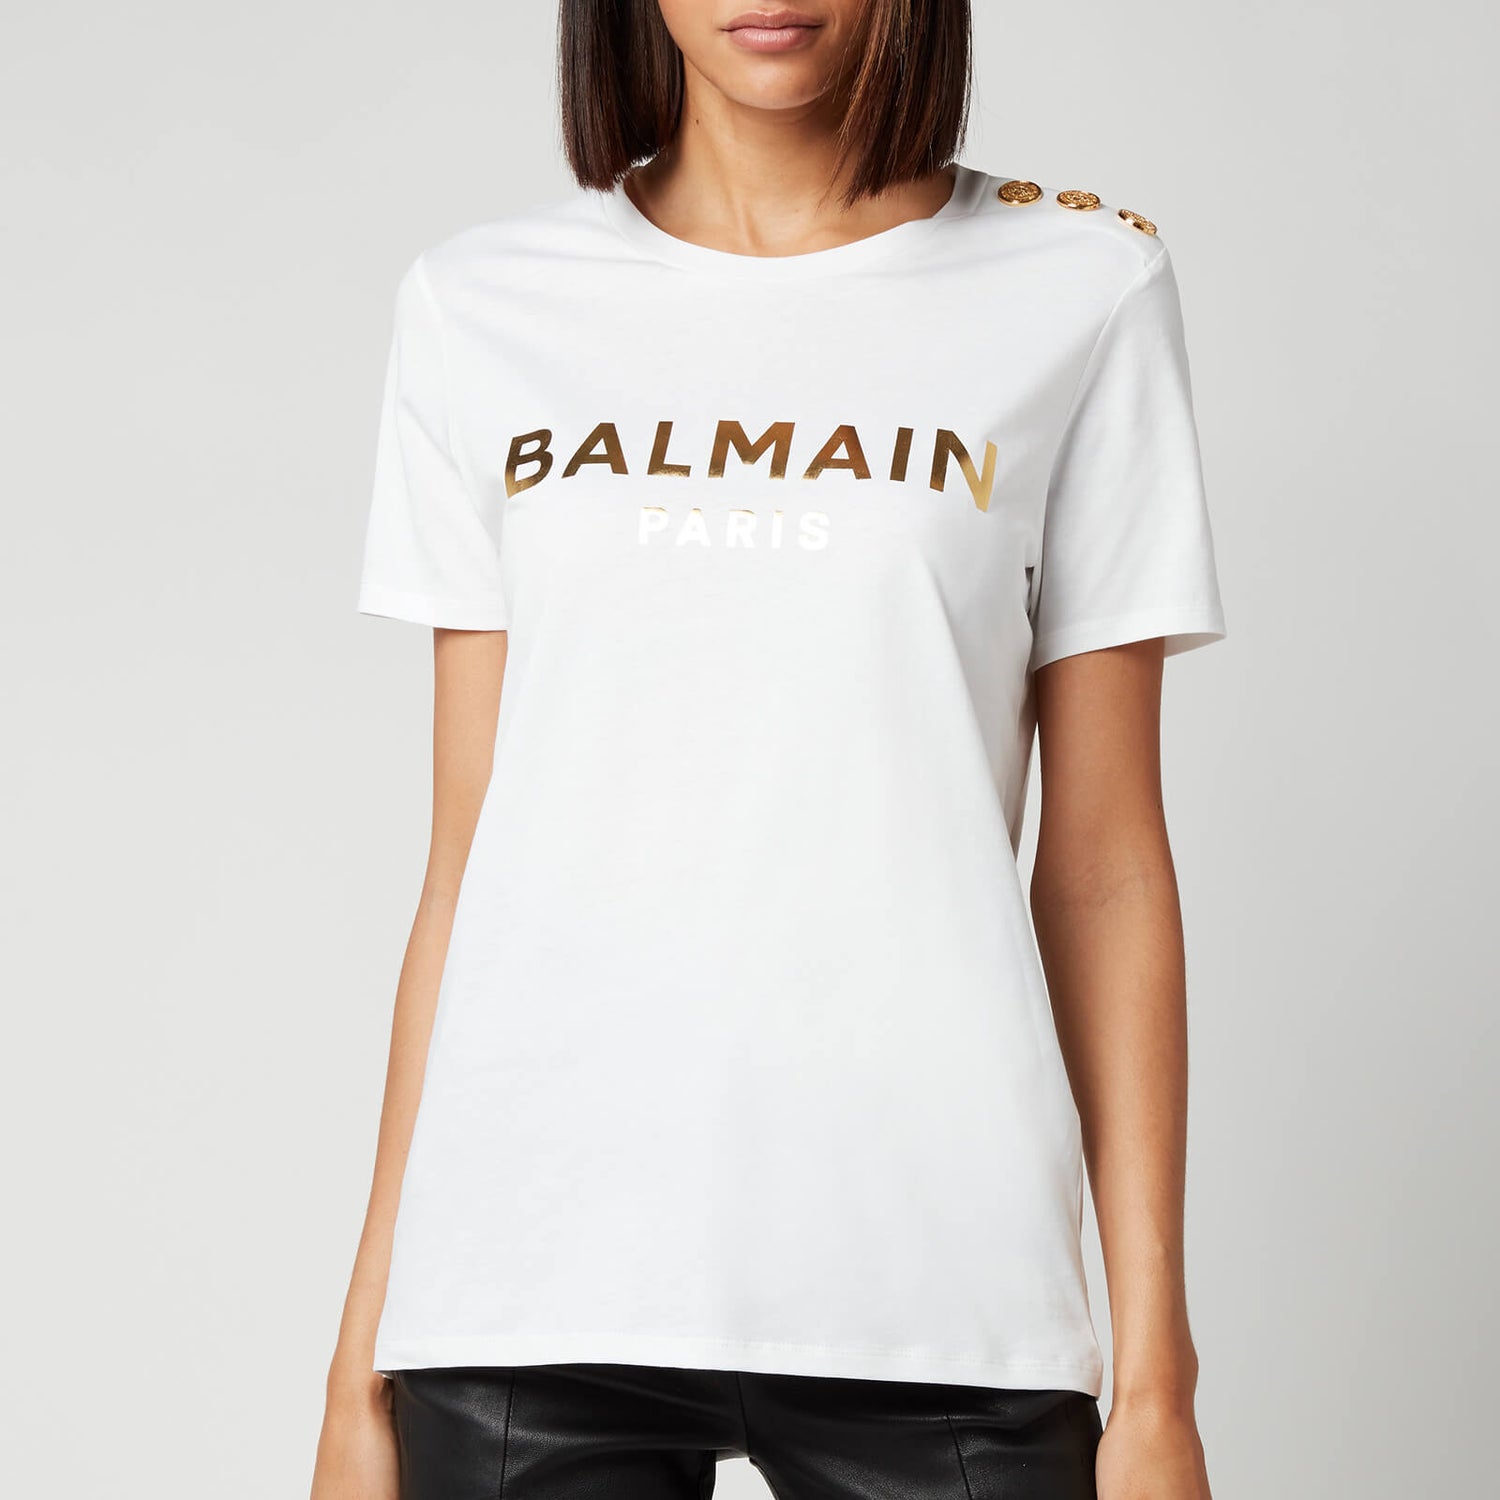 Balmain Women's Short Sleeve 3 Button Metallic Logo T-Shirt - Blanc/Or